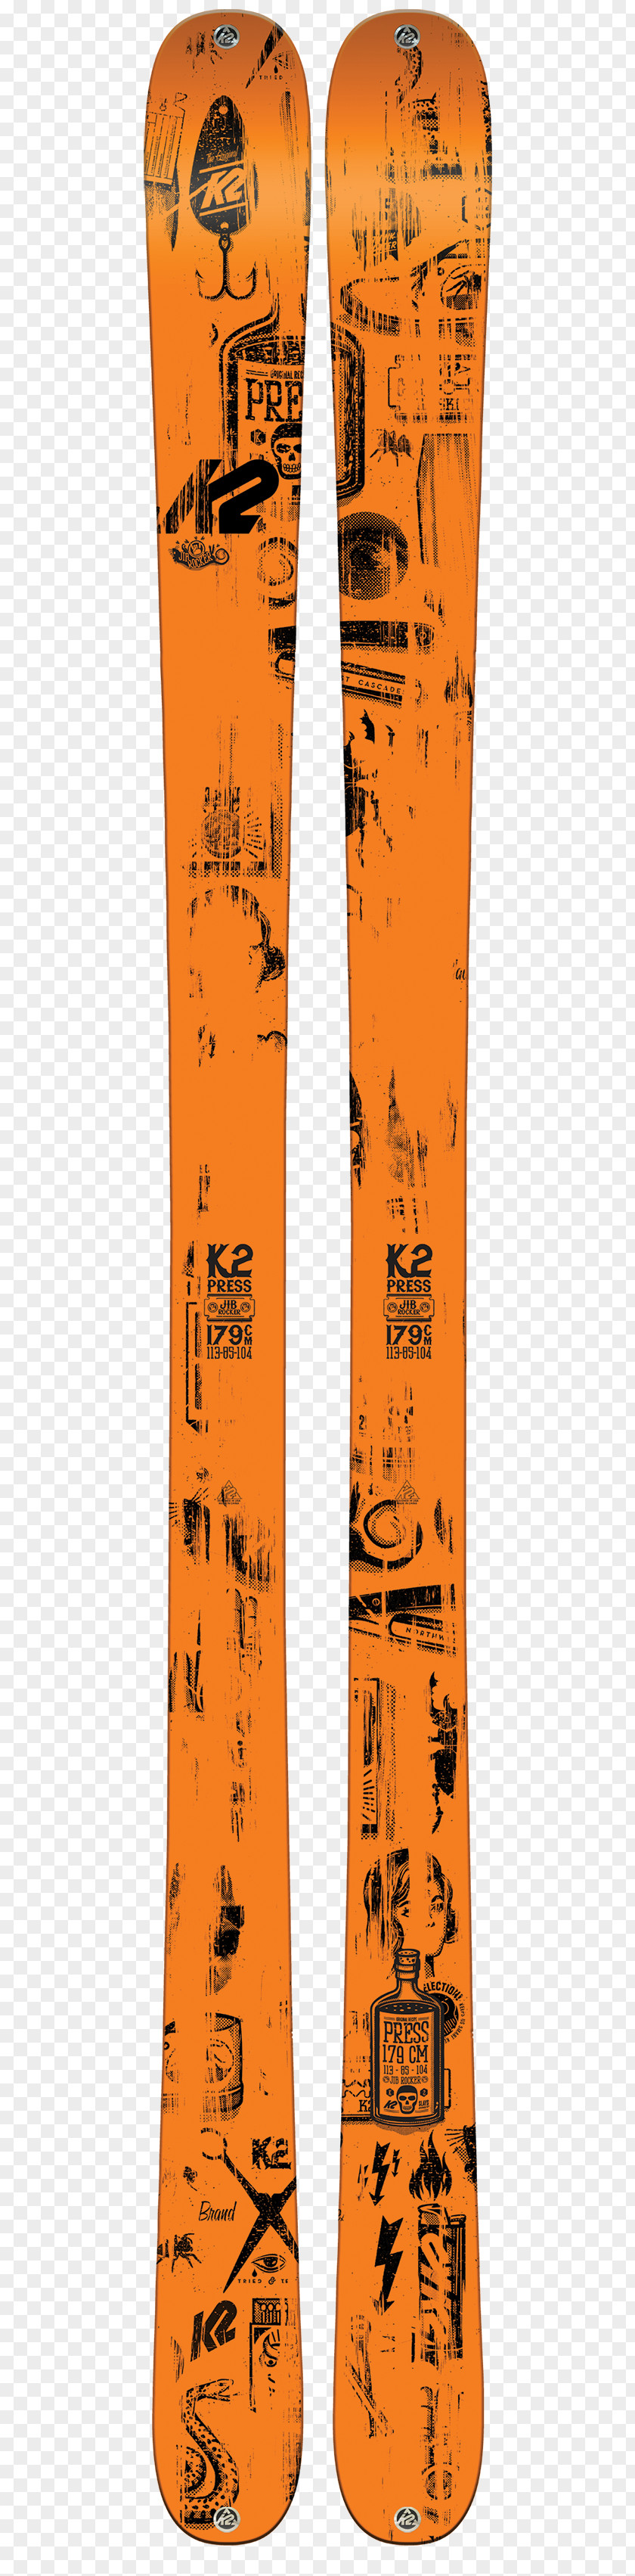 Skiing K2 Press (2017) Snowinn Architectural Engineering PNG